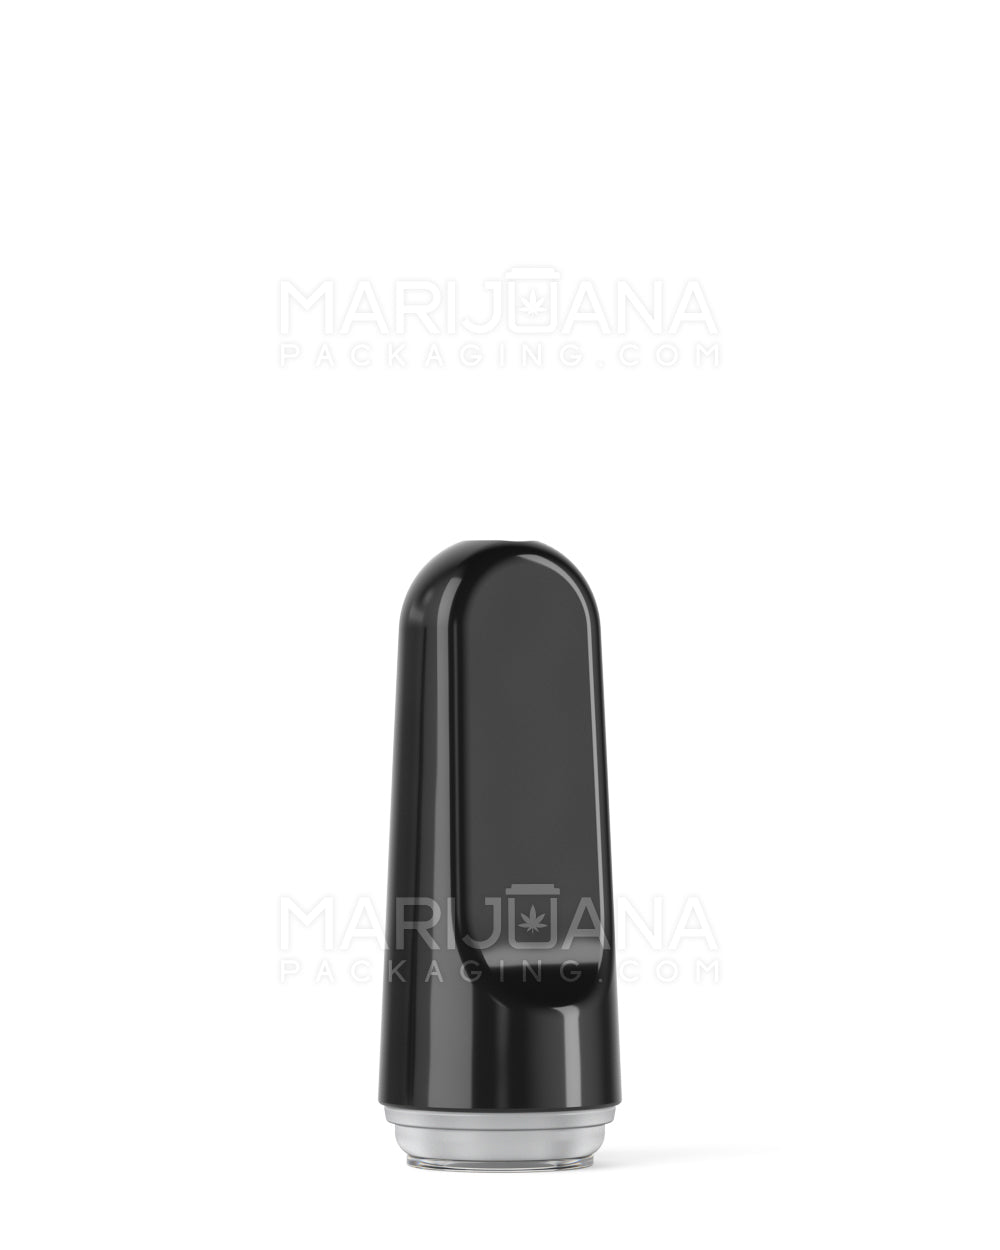 RAE | Flat Vape Mouthpiece for Hand Press Ceramic Cartridges | Black Ceramic - Hand Press - 3600 Count - 2